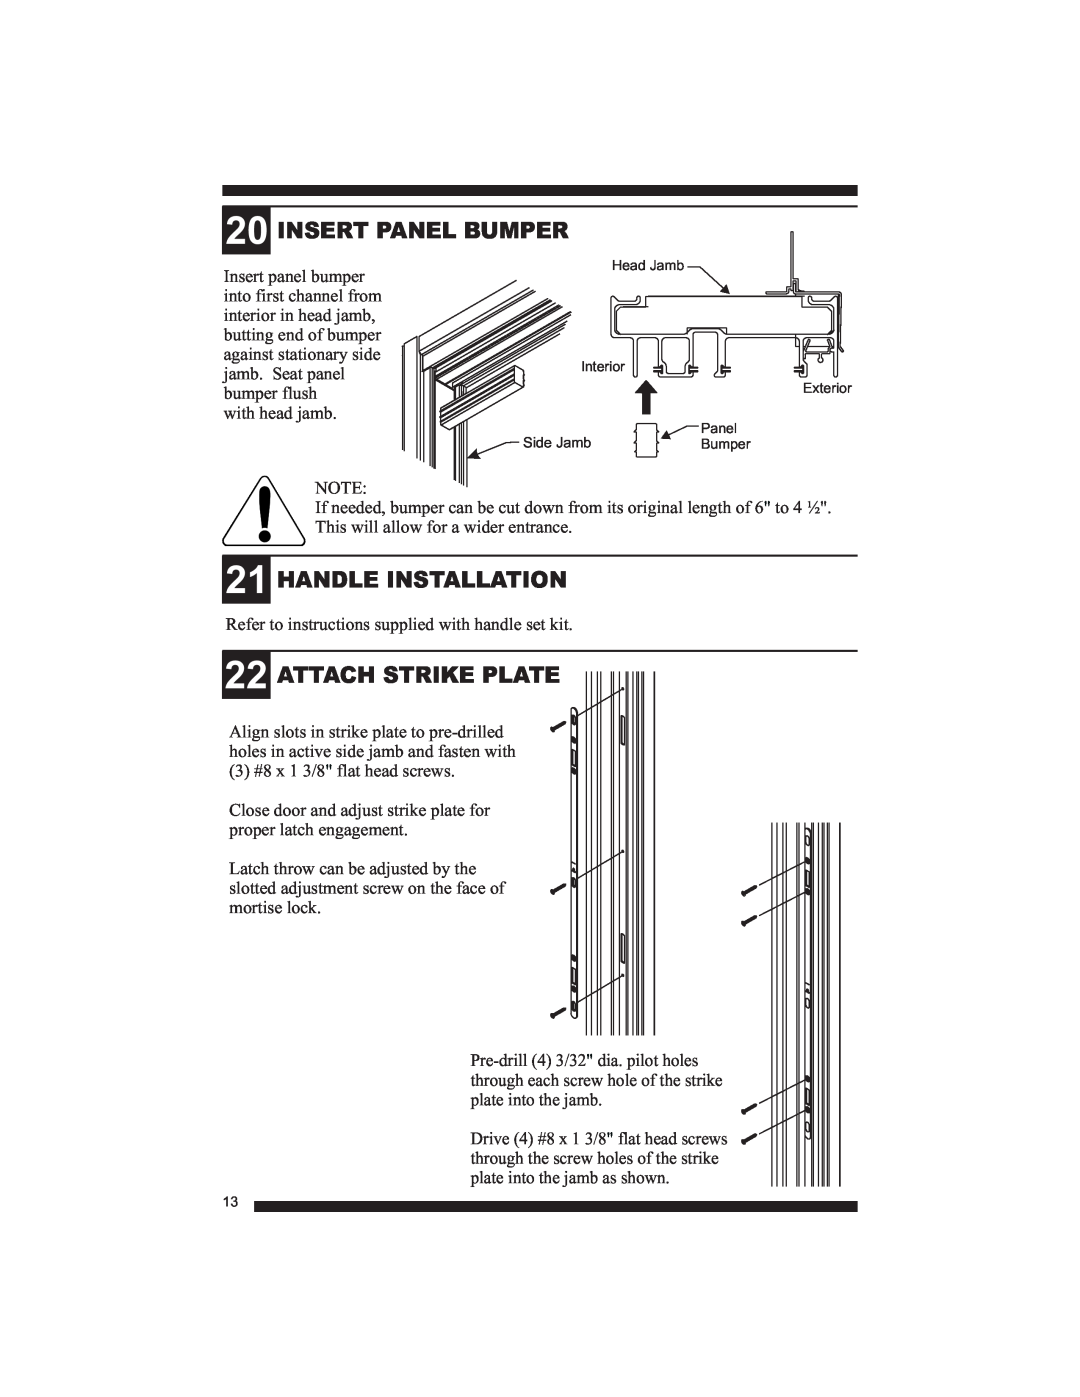 Therma-Tru Smooth-Star, Fiber-Classic manual Insert Panel Bumper, Handle Installation, Attach Strike Plate 